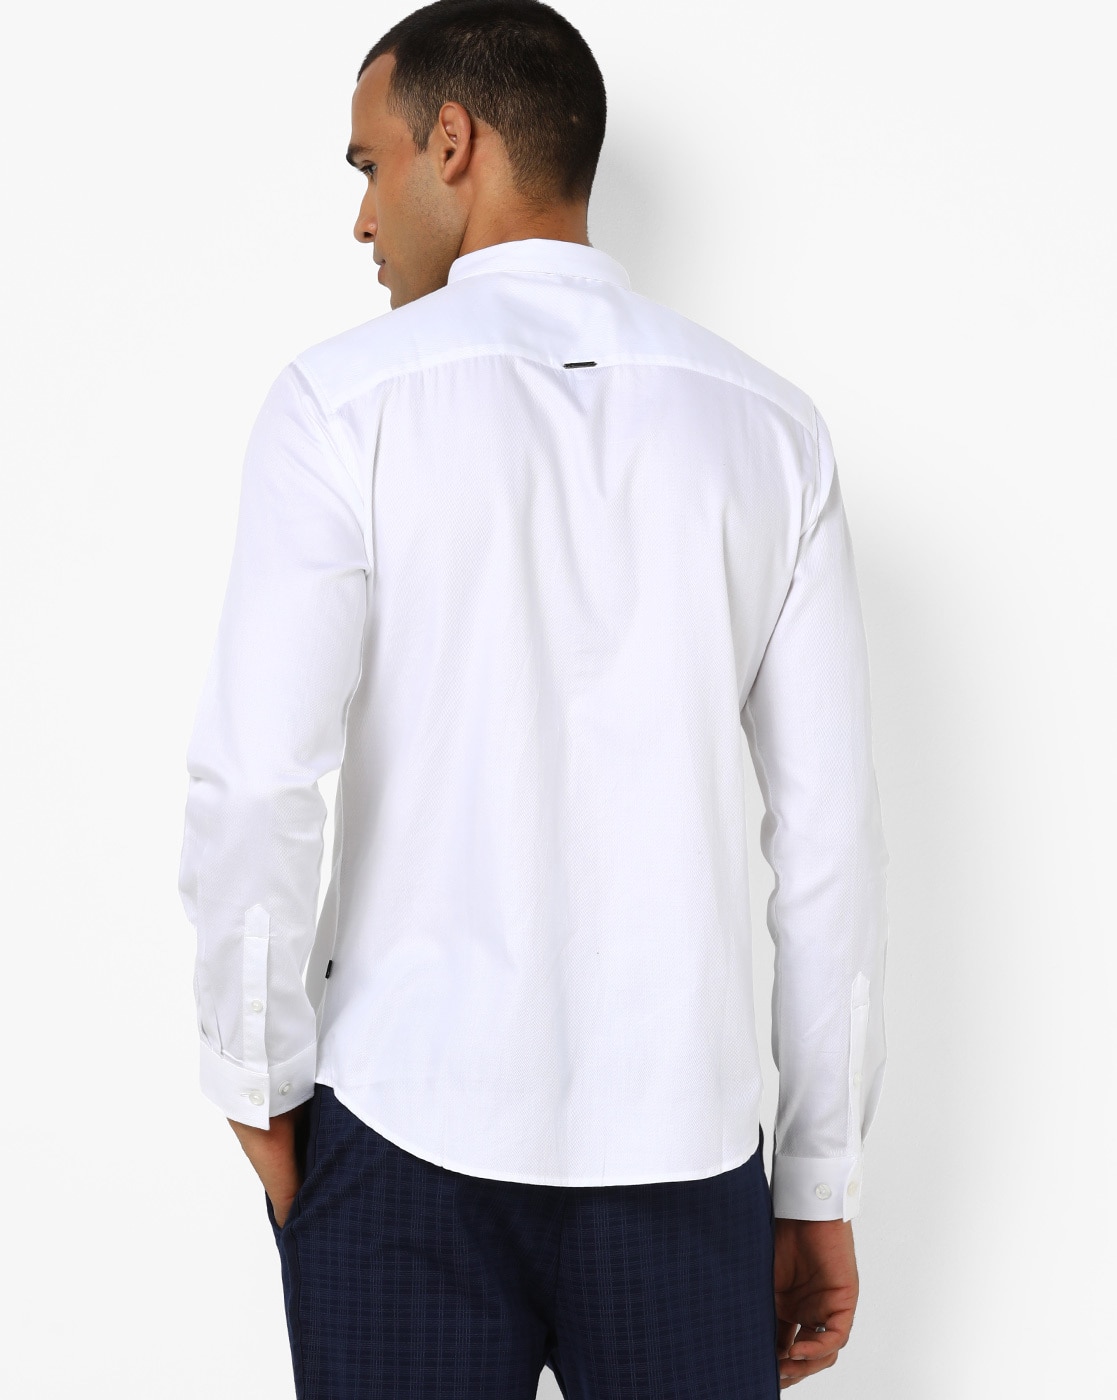 levis redloop white shirt